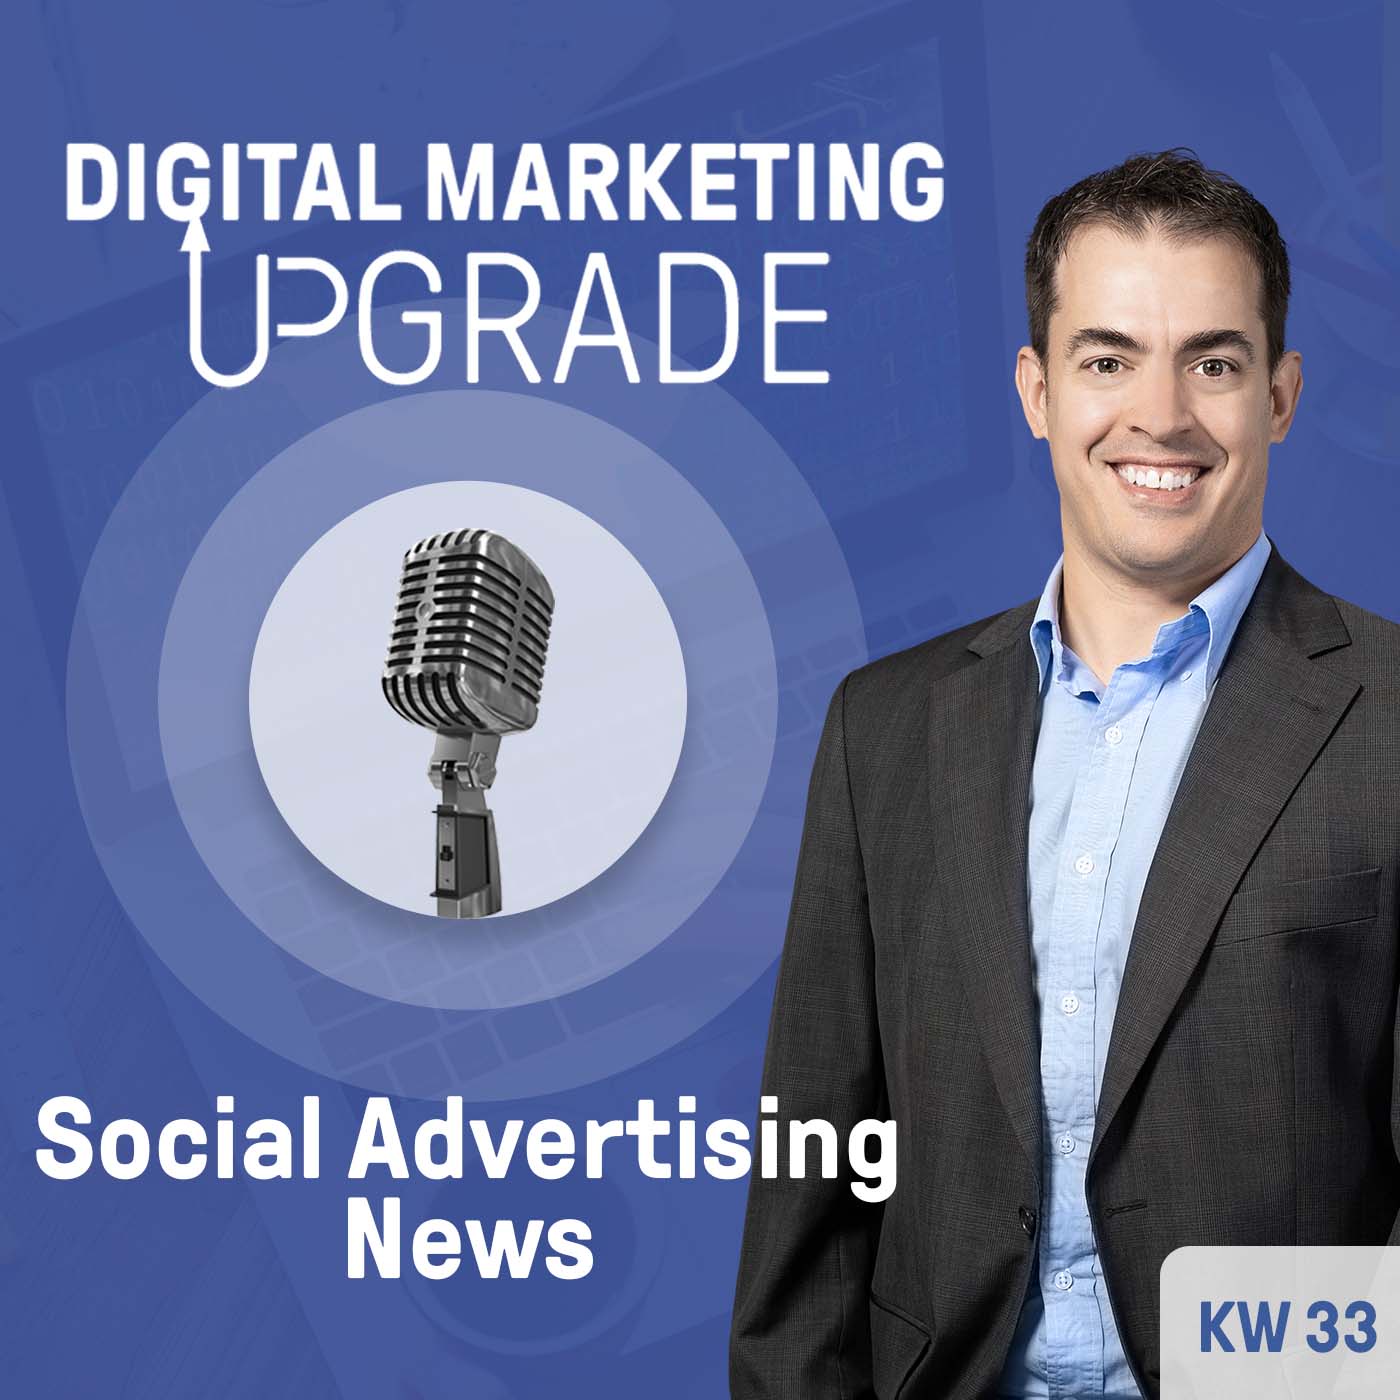 Social Advertising News - KW 33/23